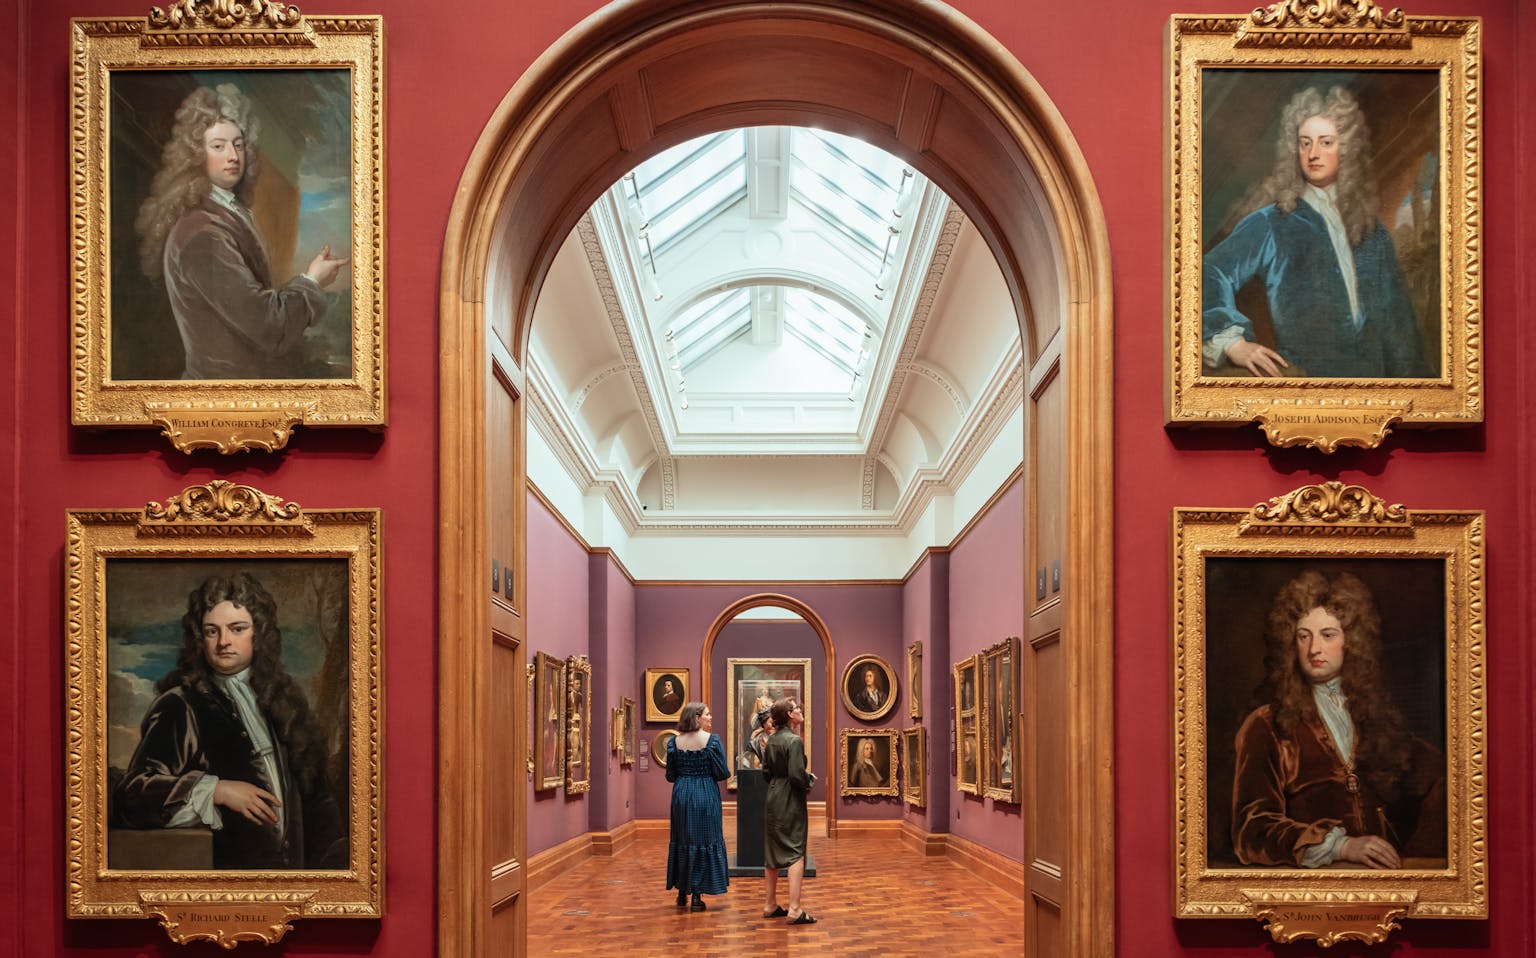 Art gallery, red walls, parquet floor, 18th century portraits of men with big hair